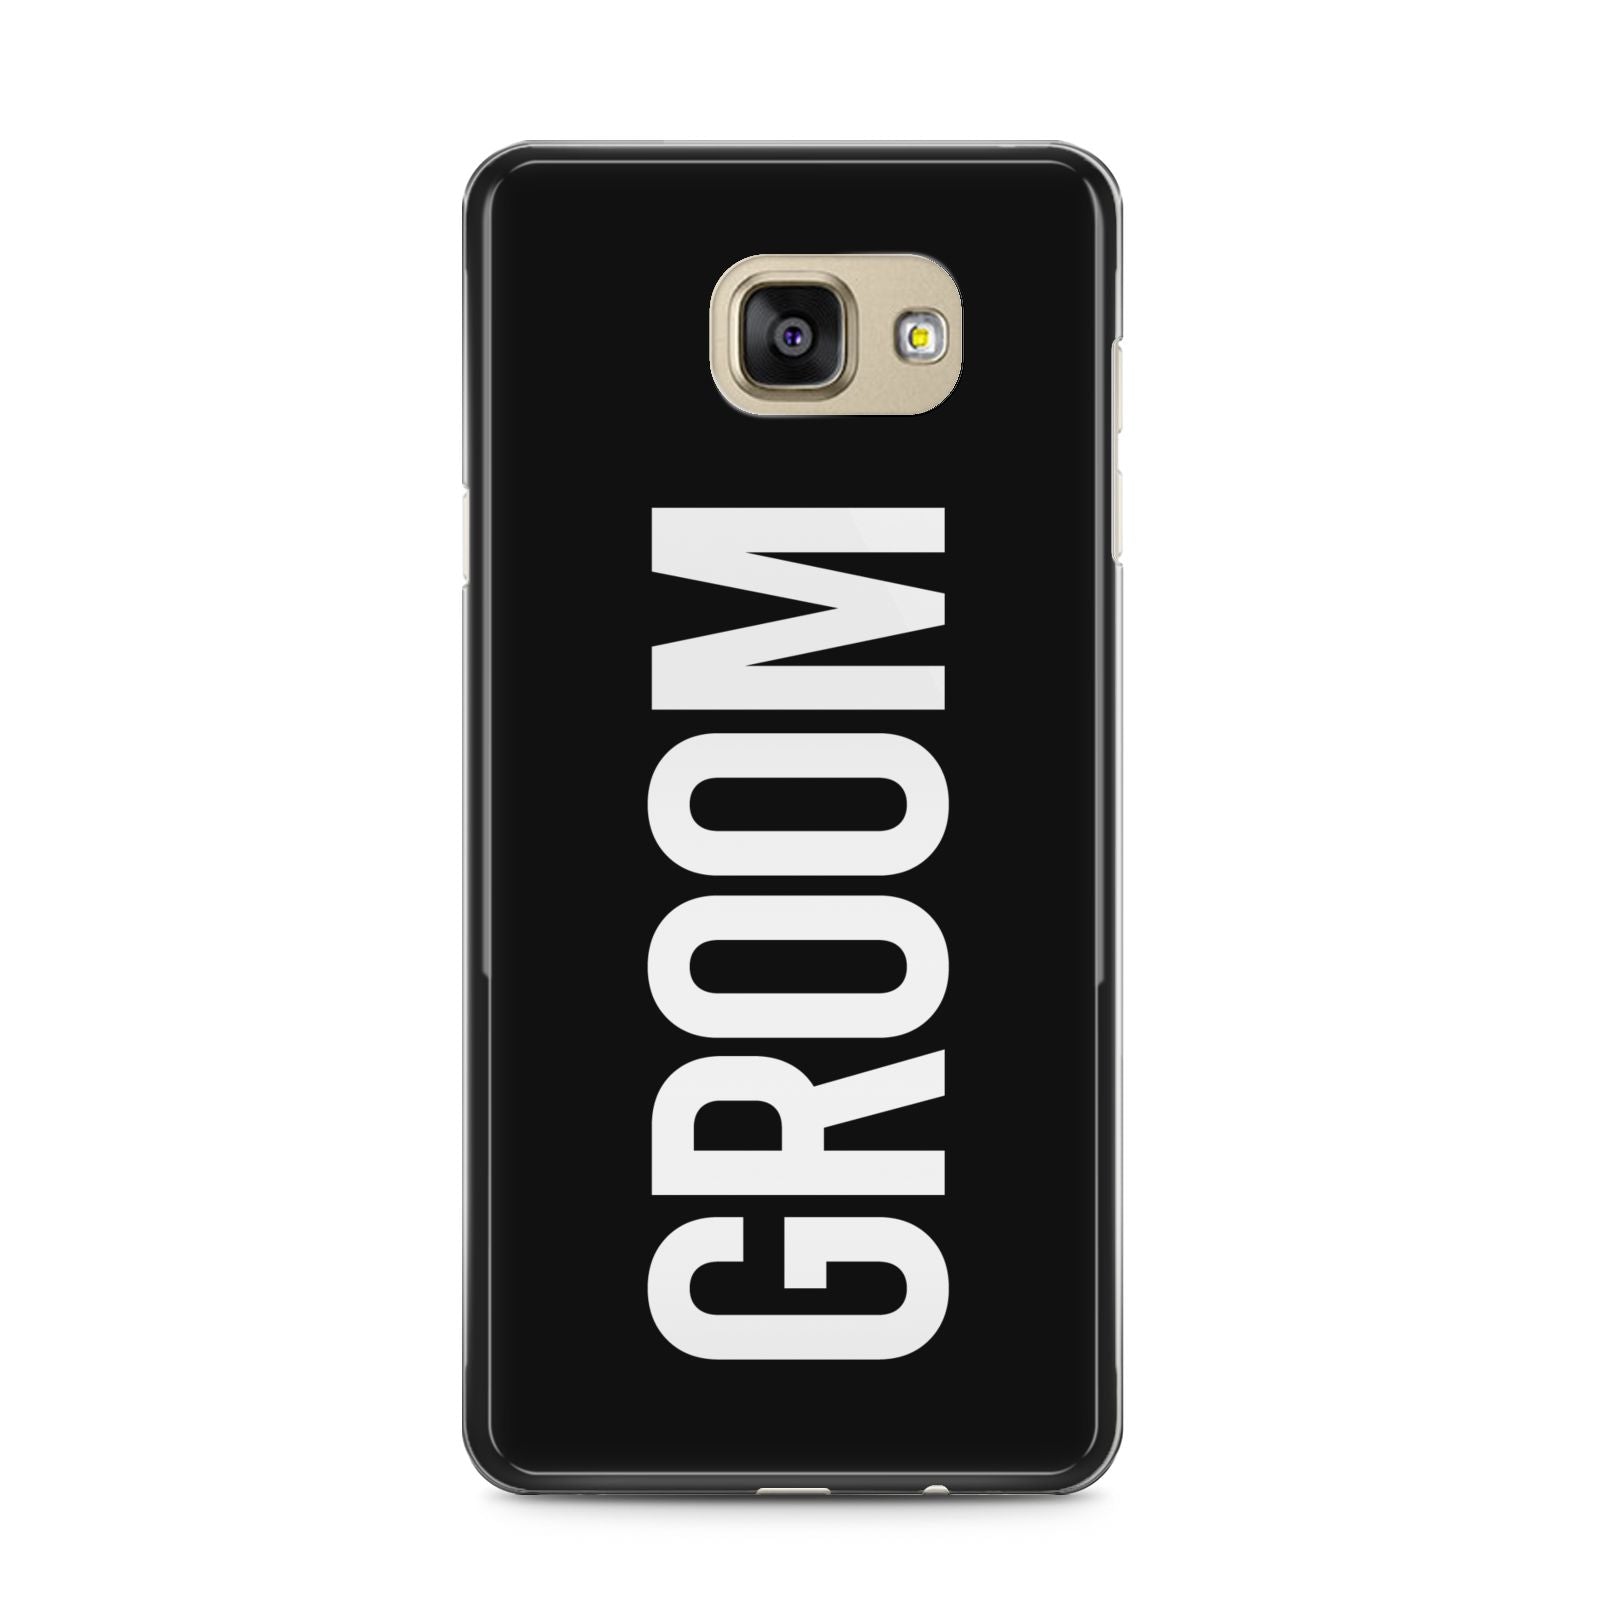 Groom Samsung Galaxy A5 2016 Case on gold phone